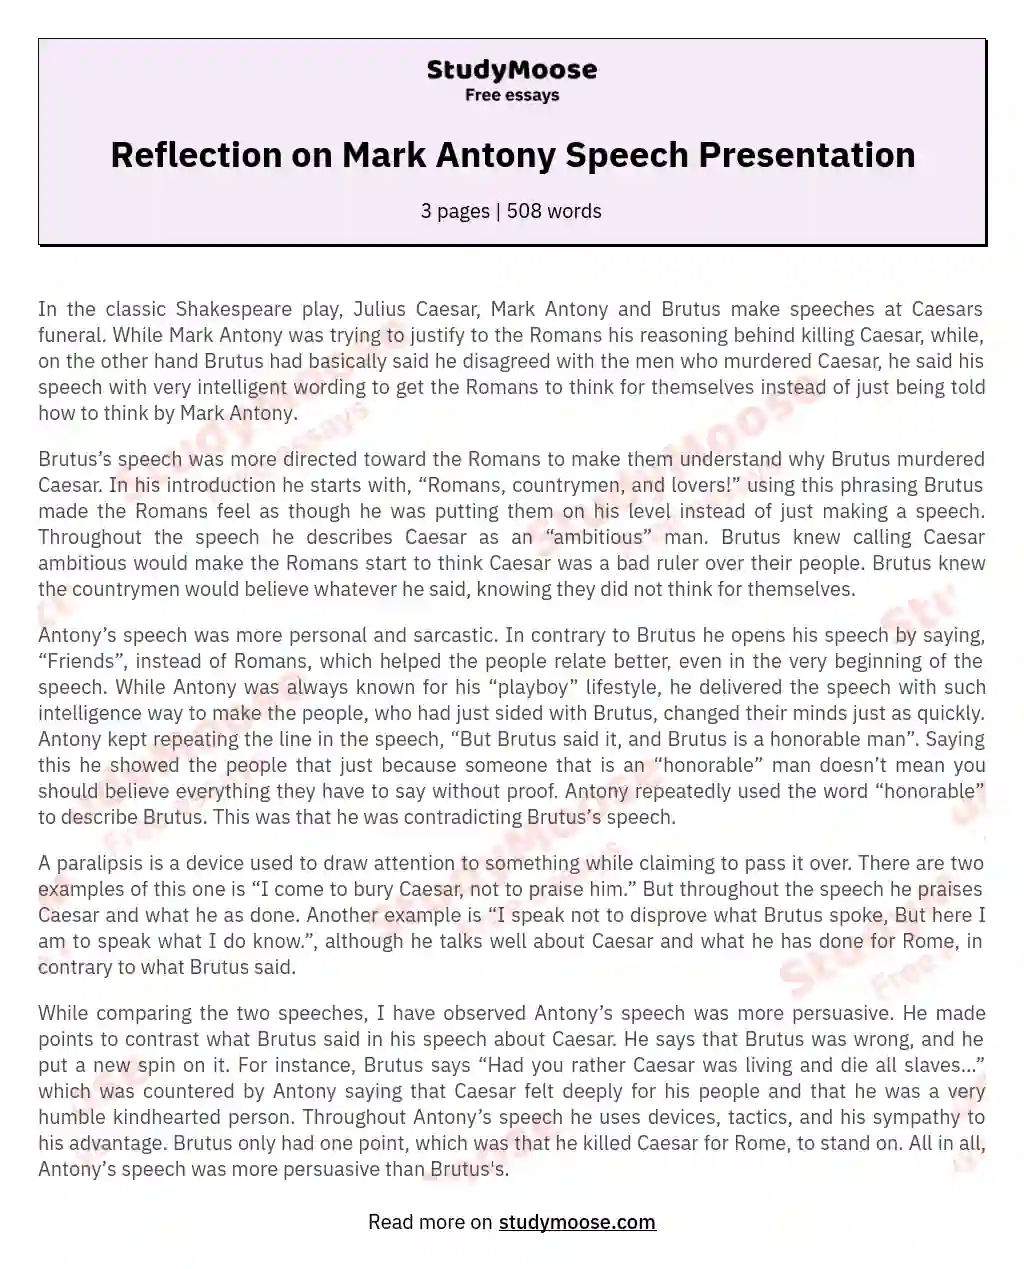 Reflection on Mark Antony Speech Presentation